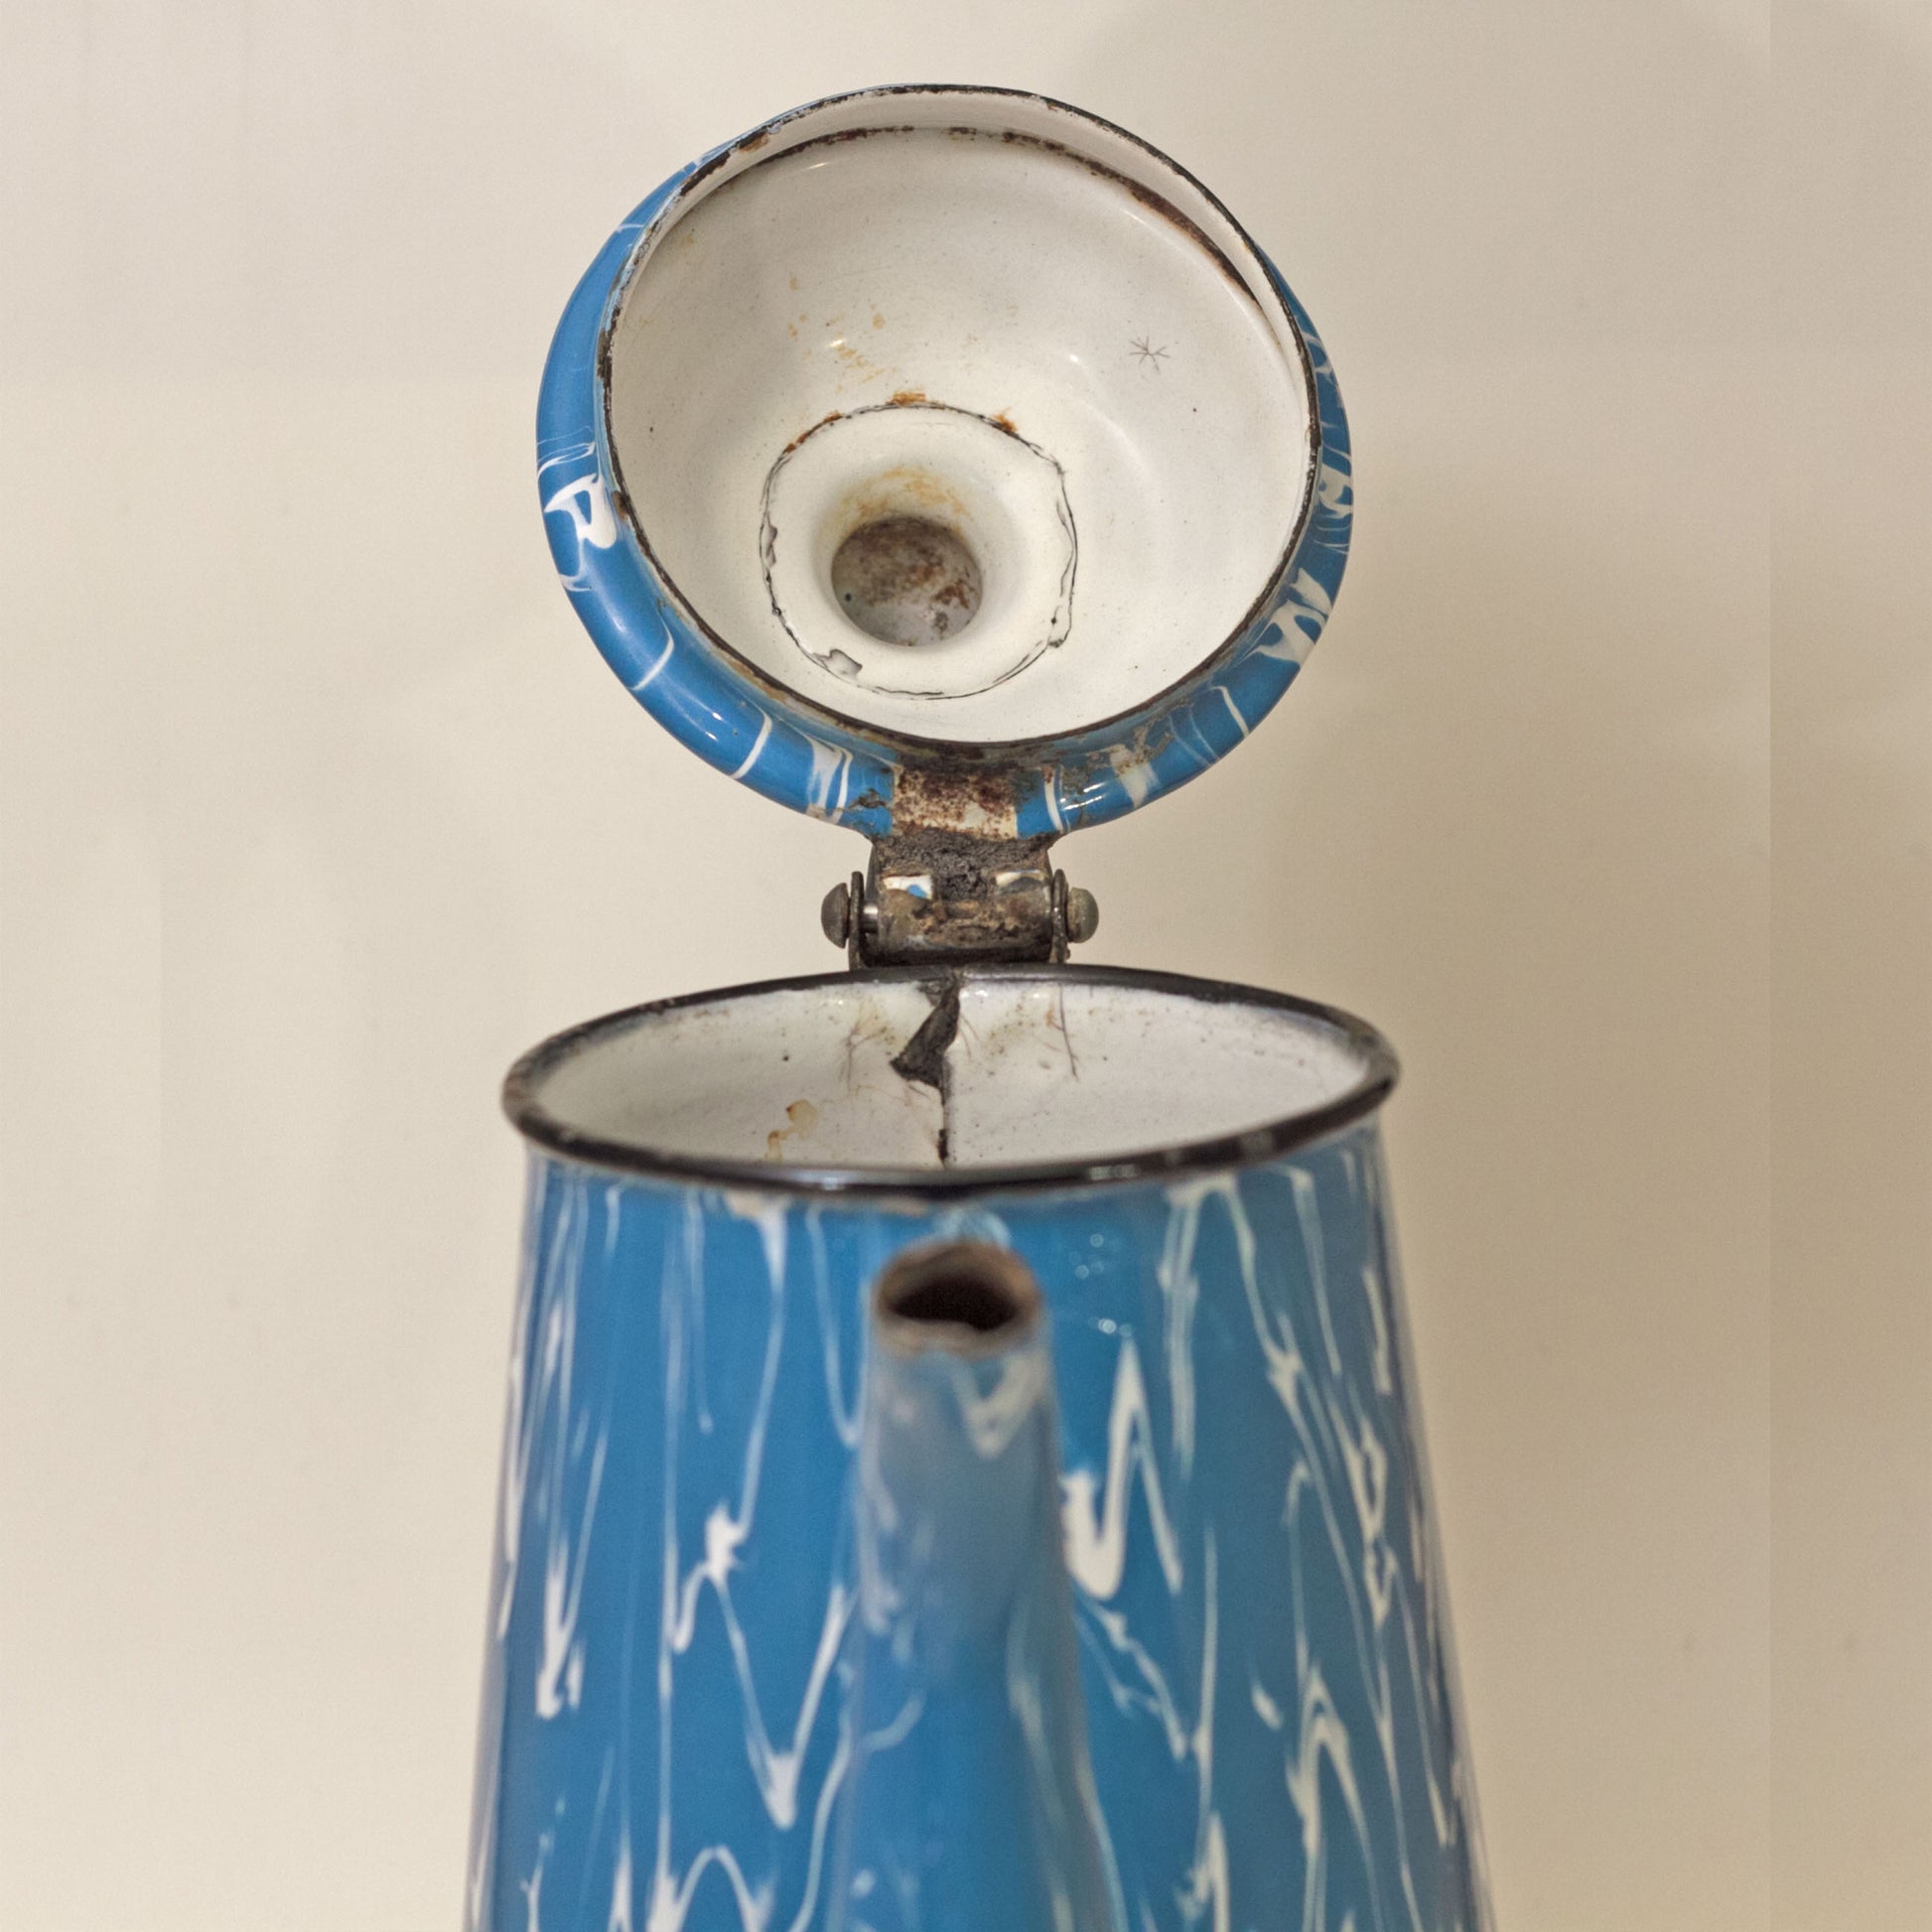 GRANITE WARE GOOSENECK TEAPOT Blue and White Swirl Circa 1880 - 1920